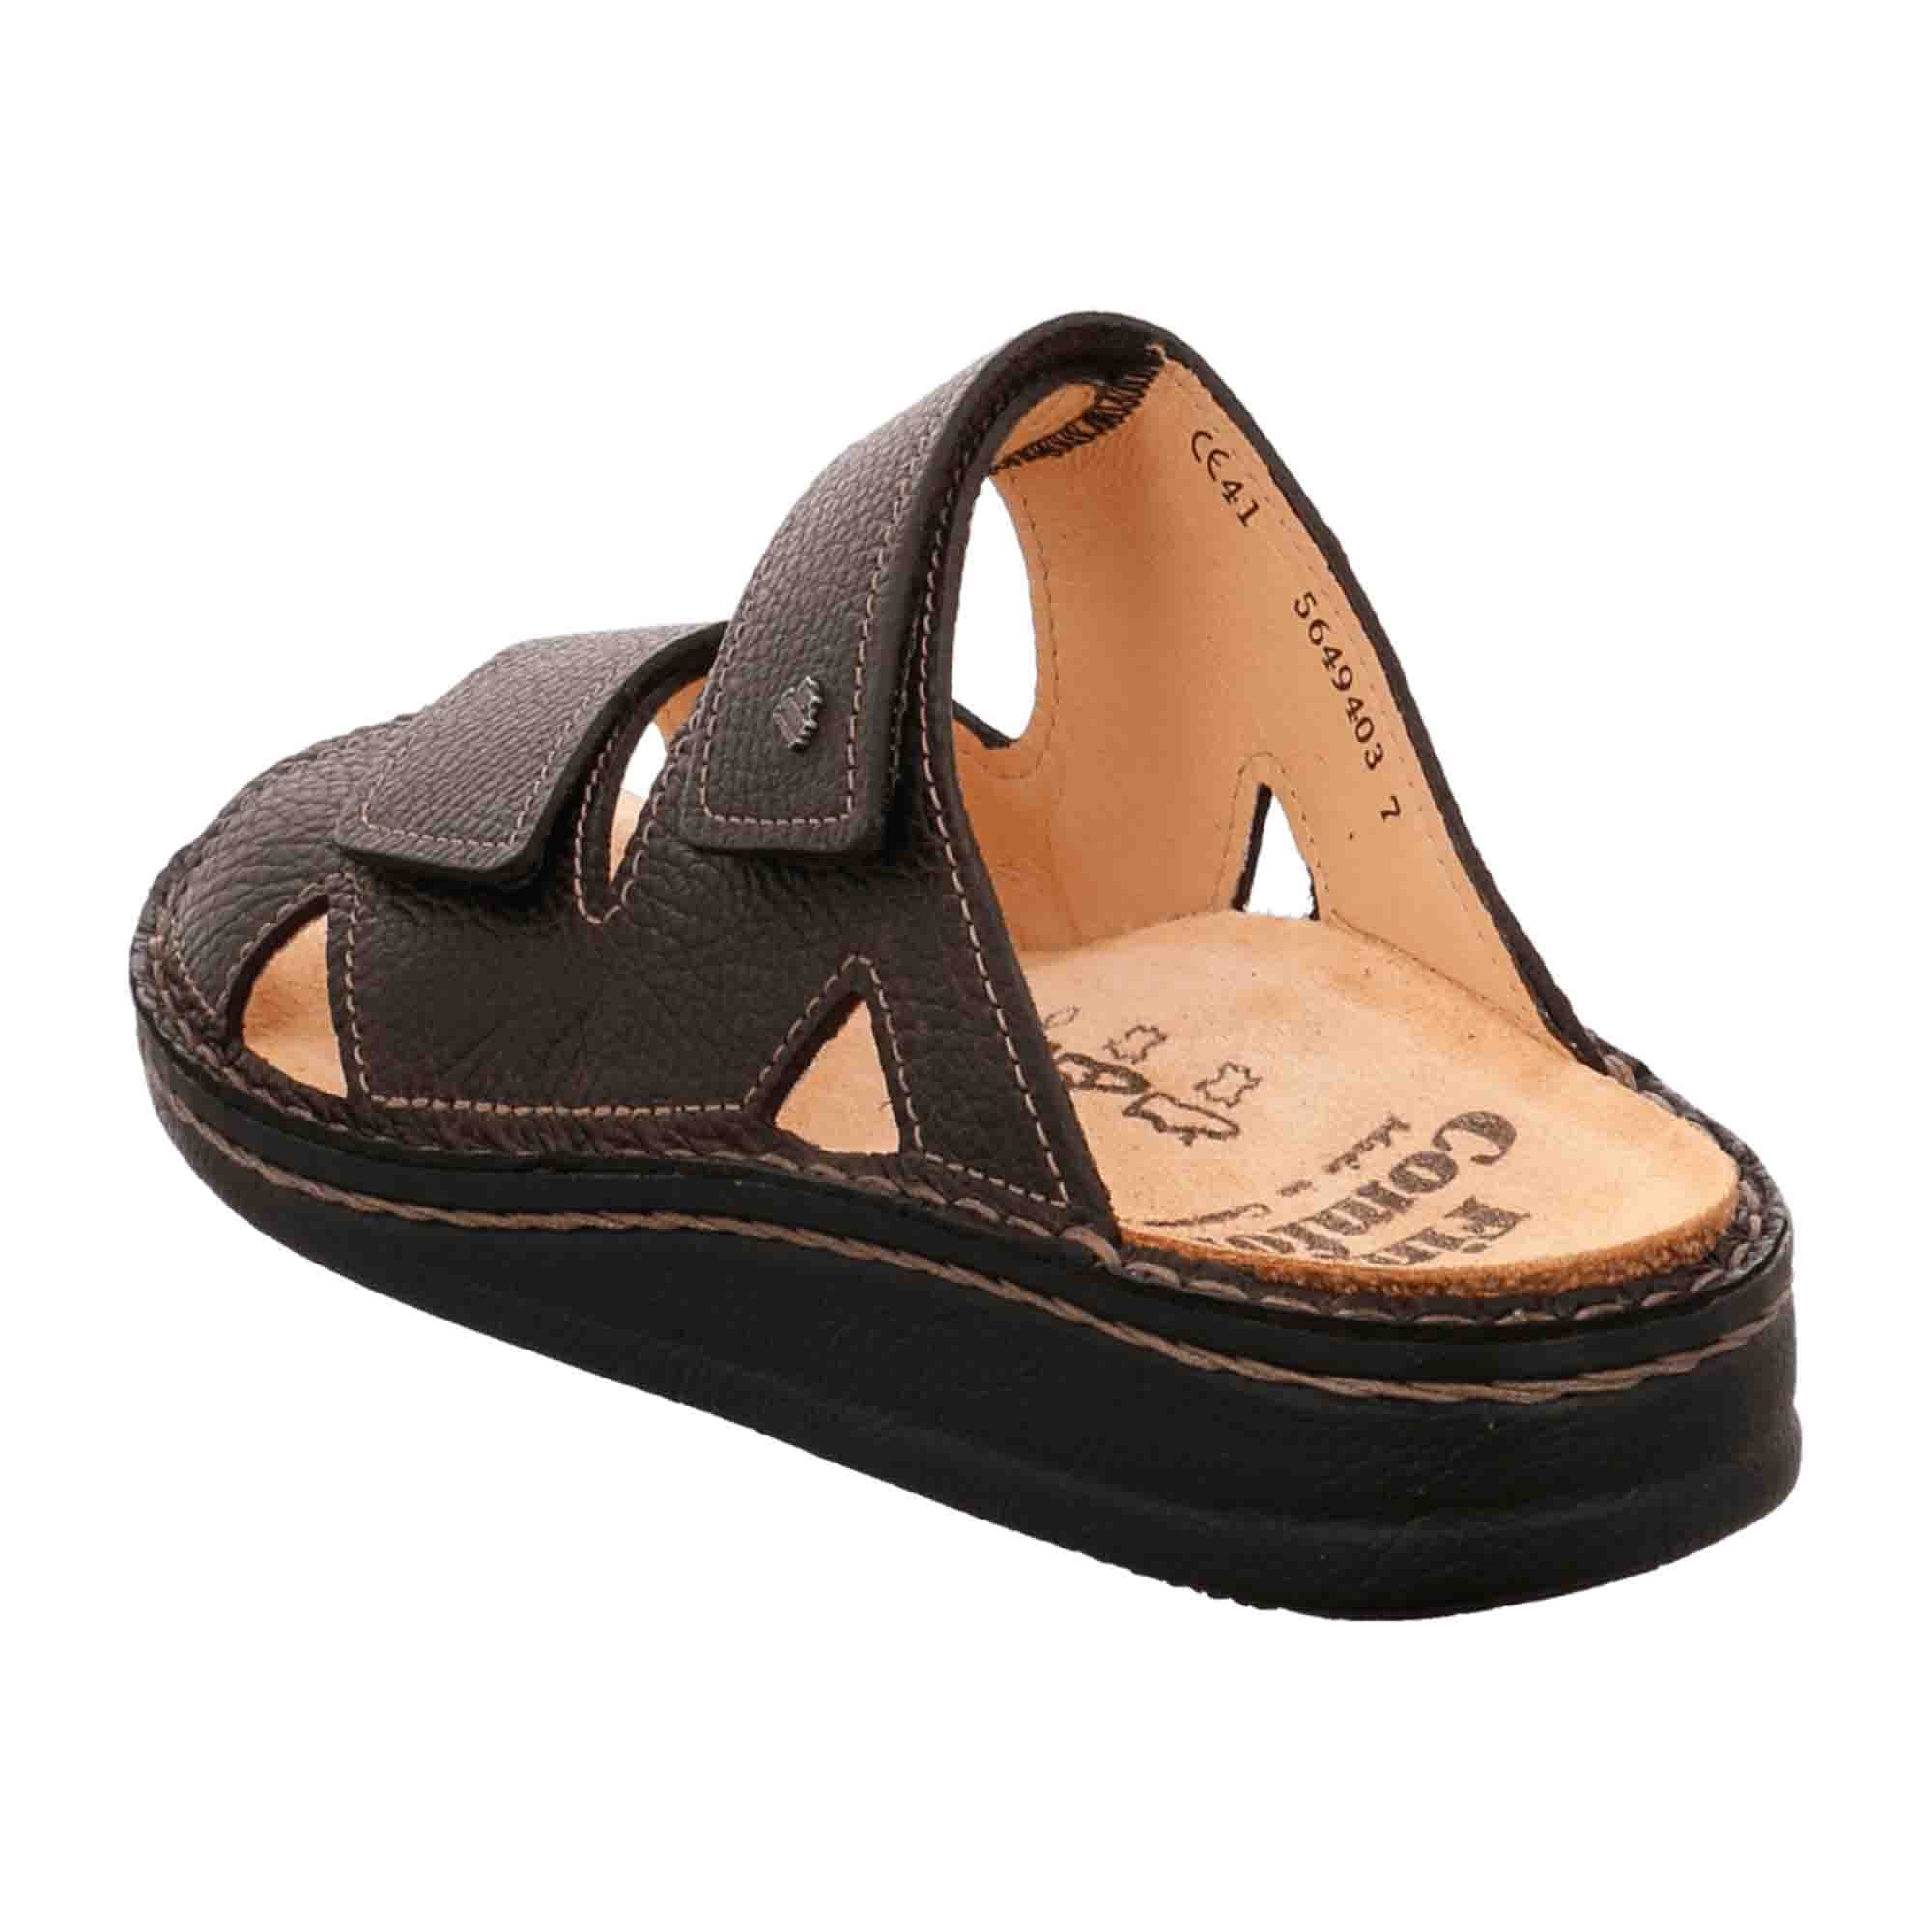 Finn Comfort Danzig-S Men's Comfort Sandals, Stylish Brown Leather